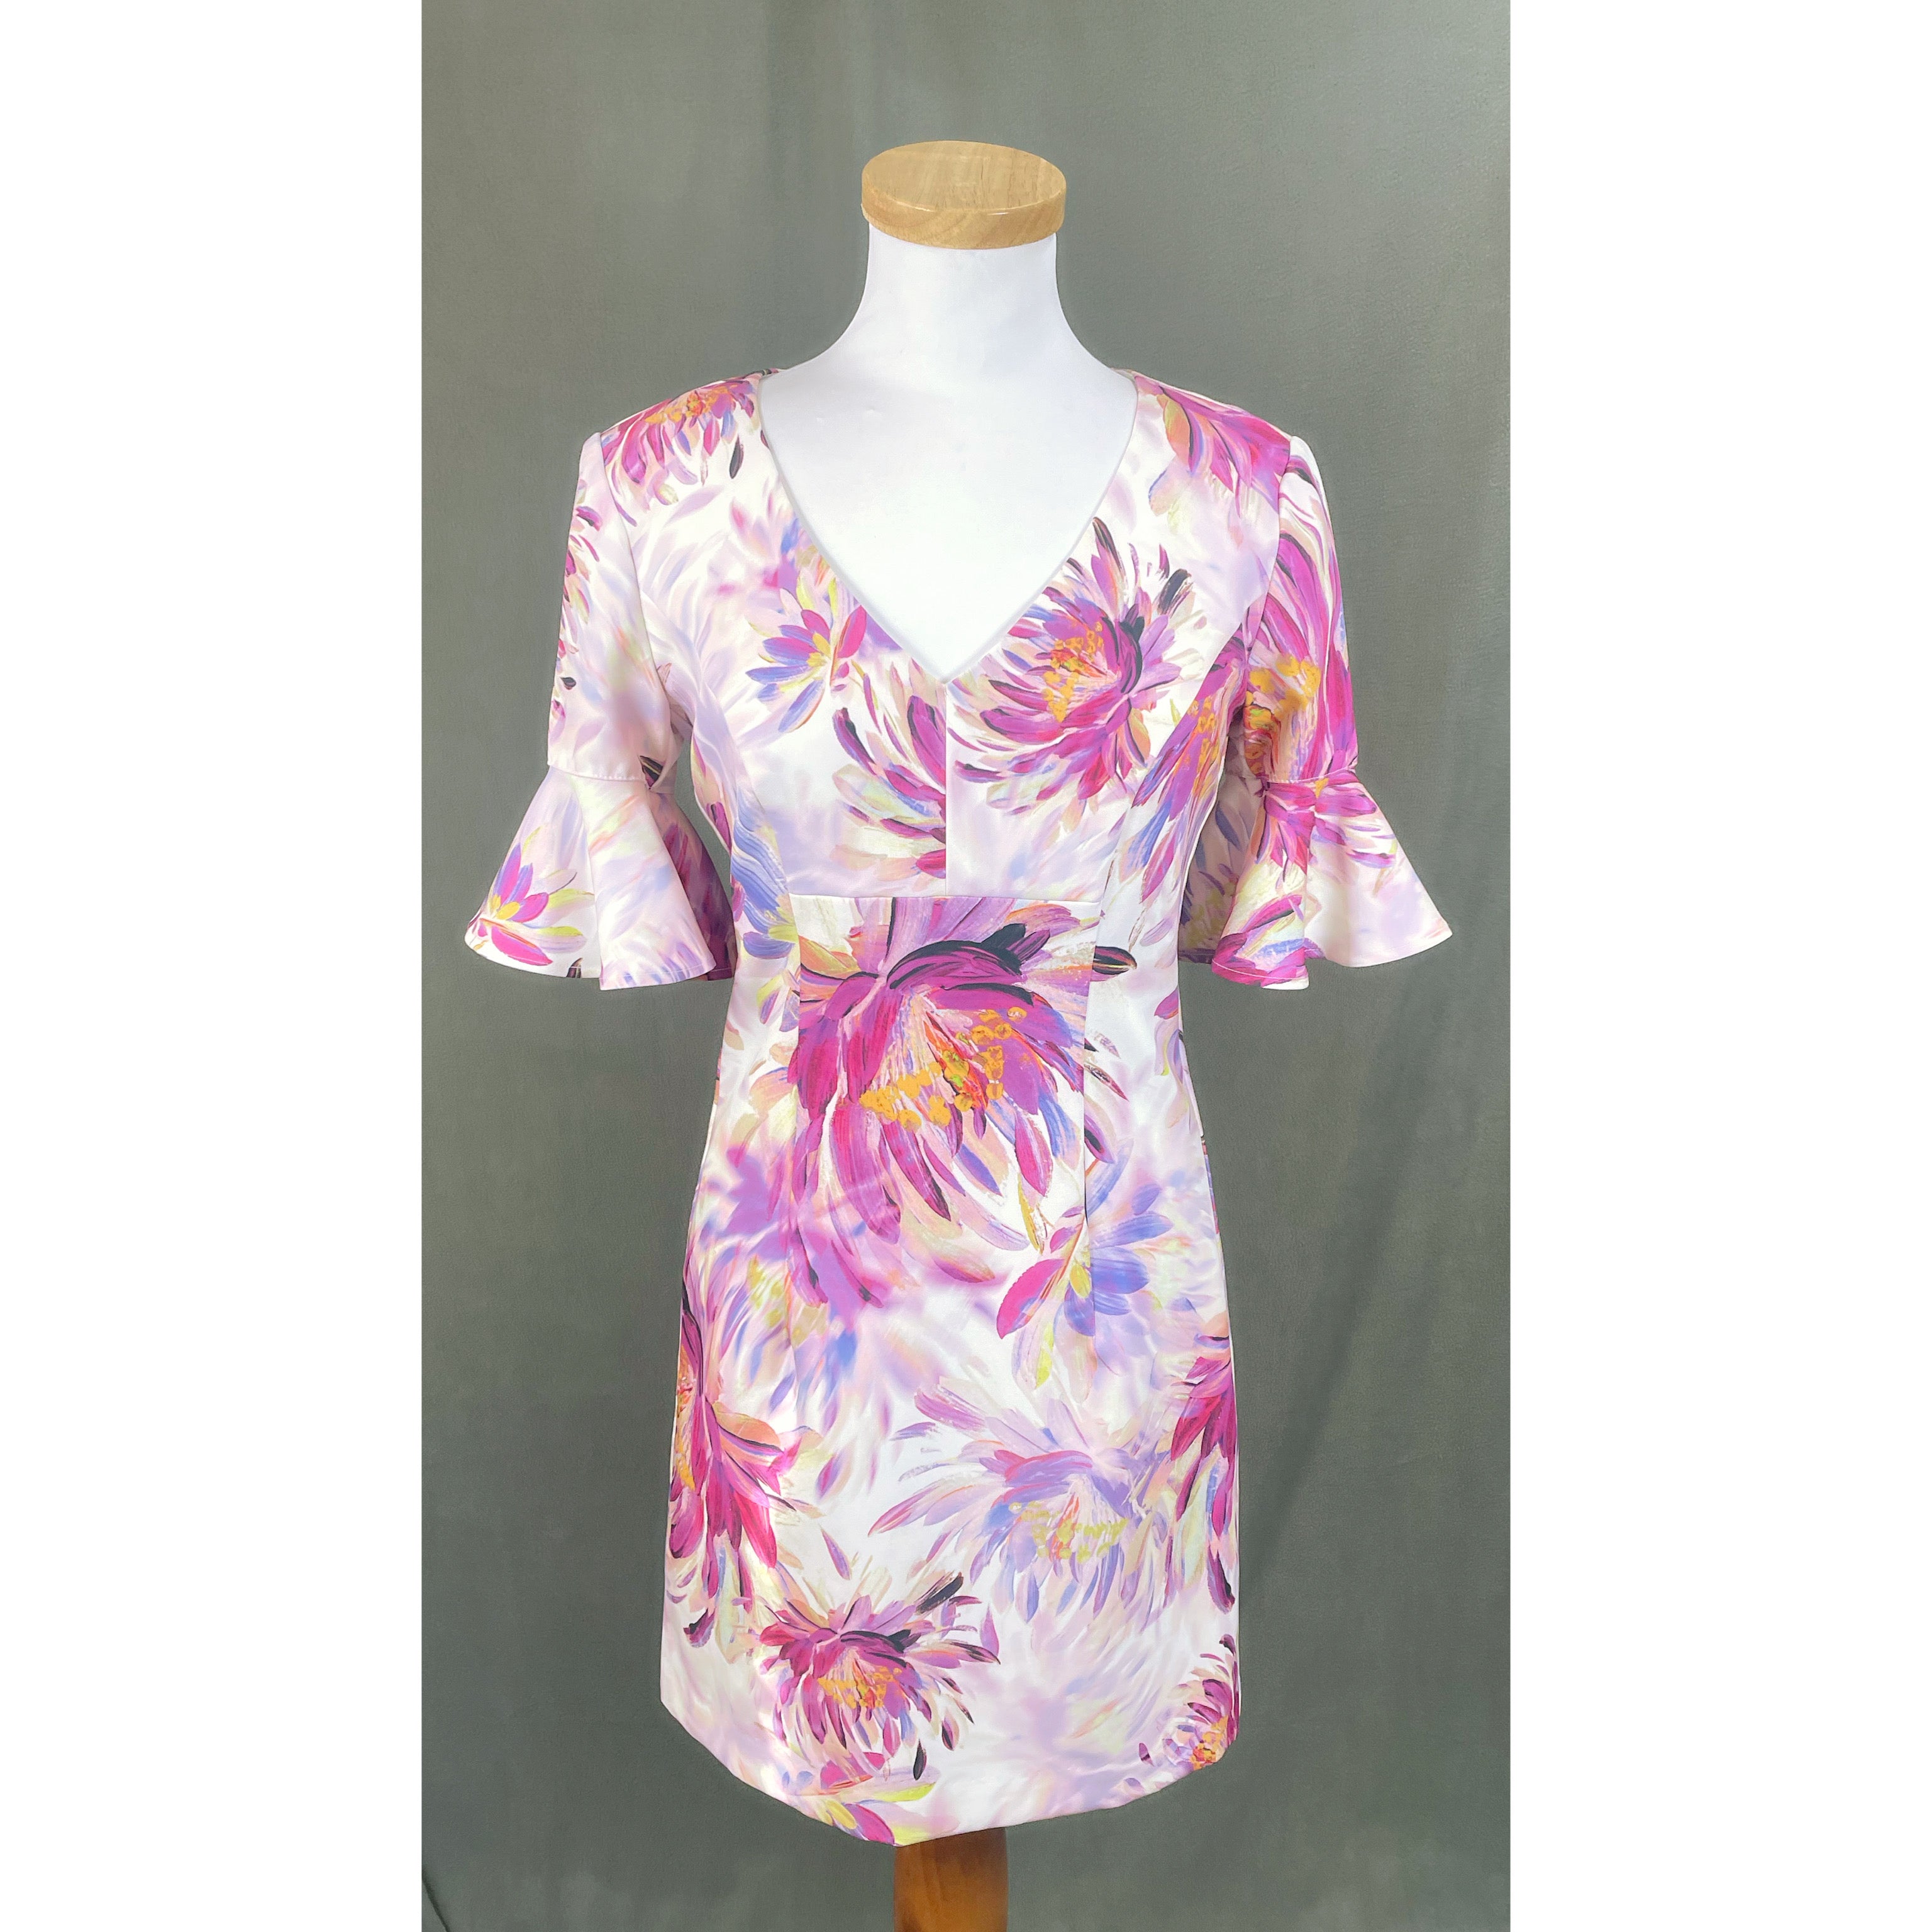 Trina Turk lavender floral dress, size 4